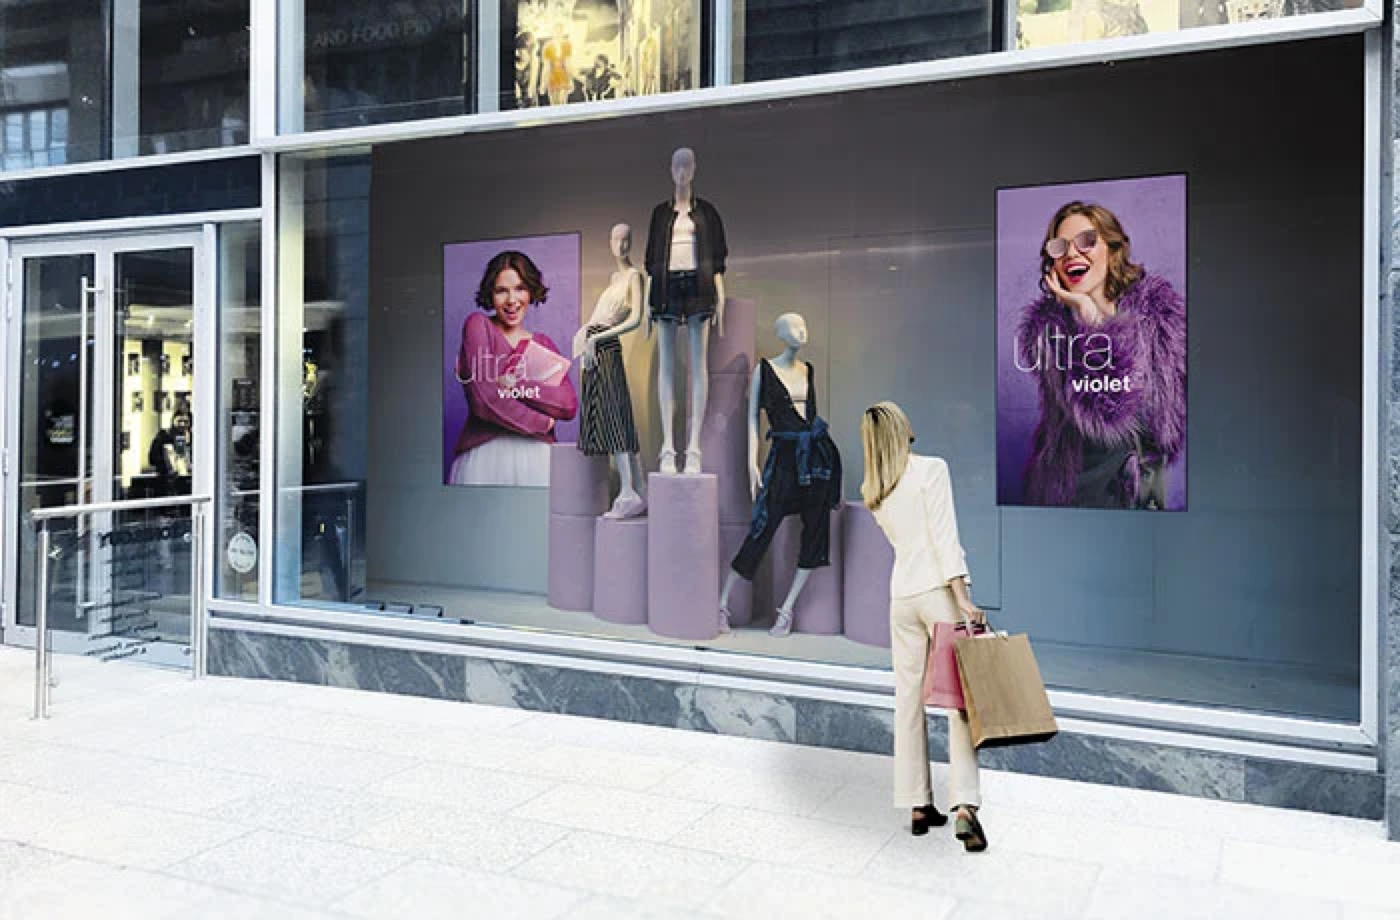 Window Digital Signage for retail